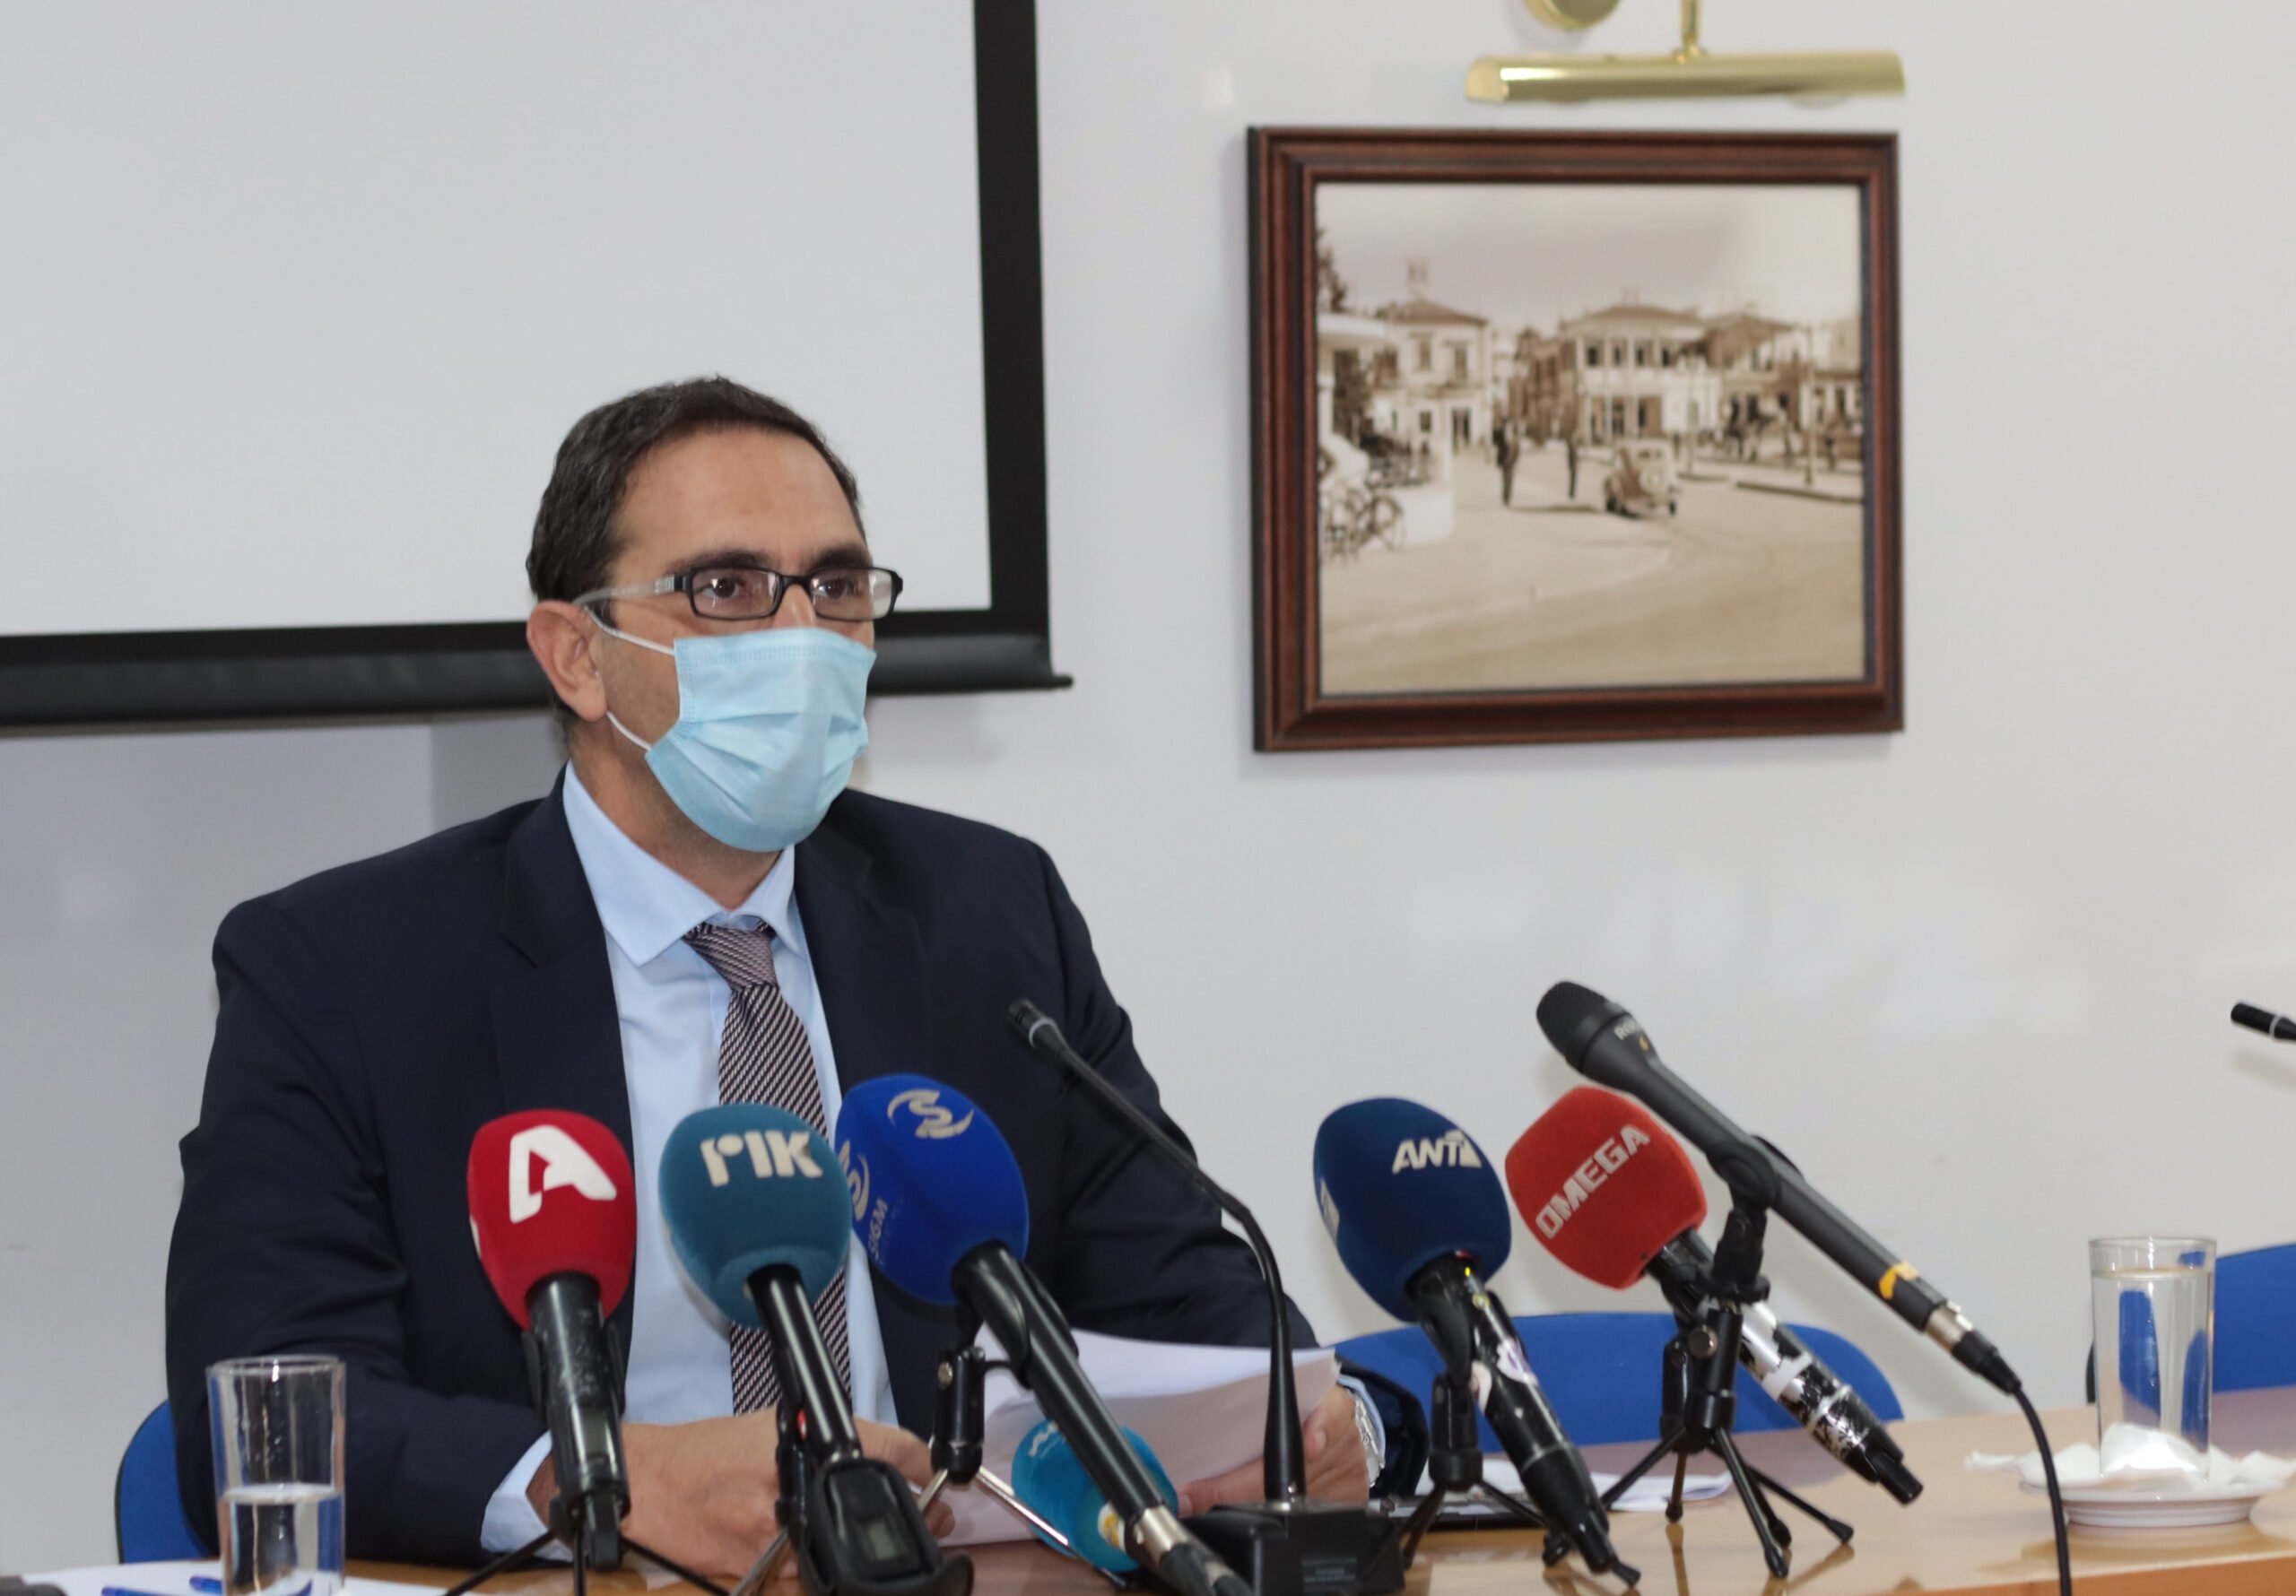 Coronavirus: η κατάσταση βελτιώθηκε αλλά ο κίνδυνος παραμένει, προειδοποιεί ο υπουργός